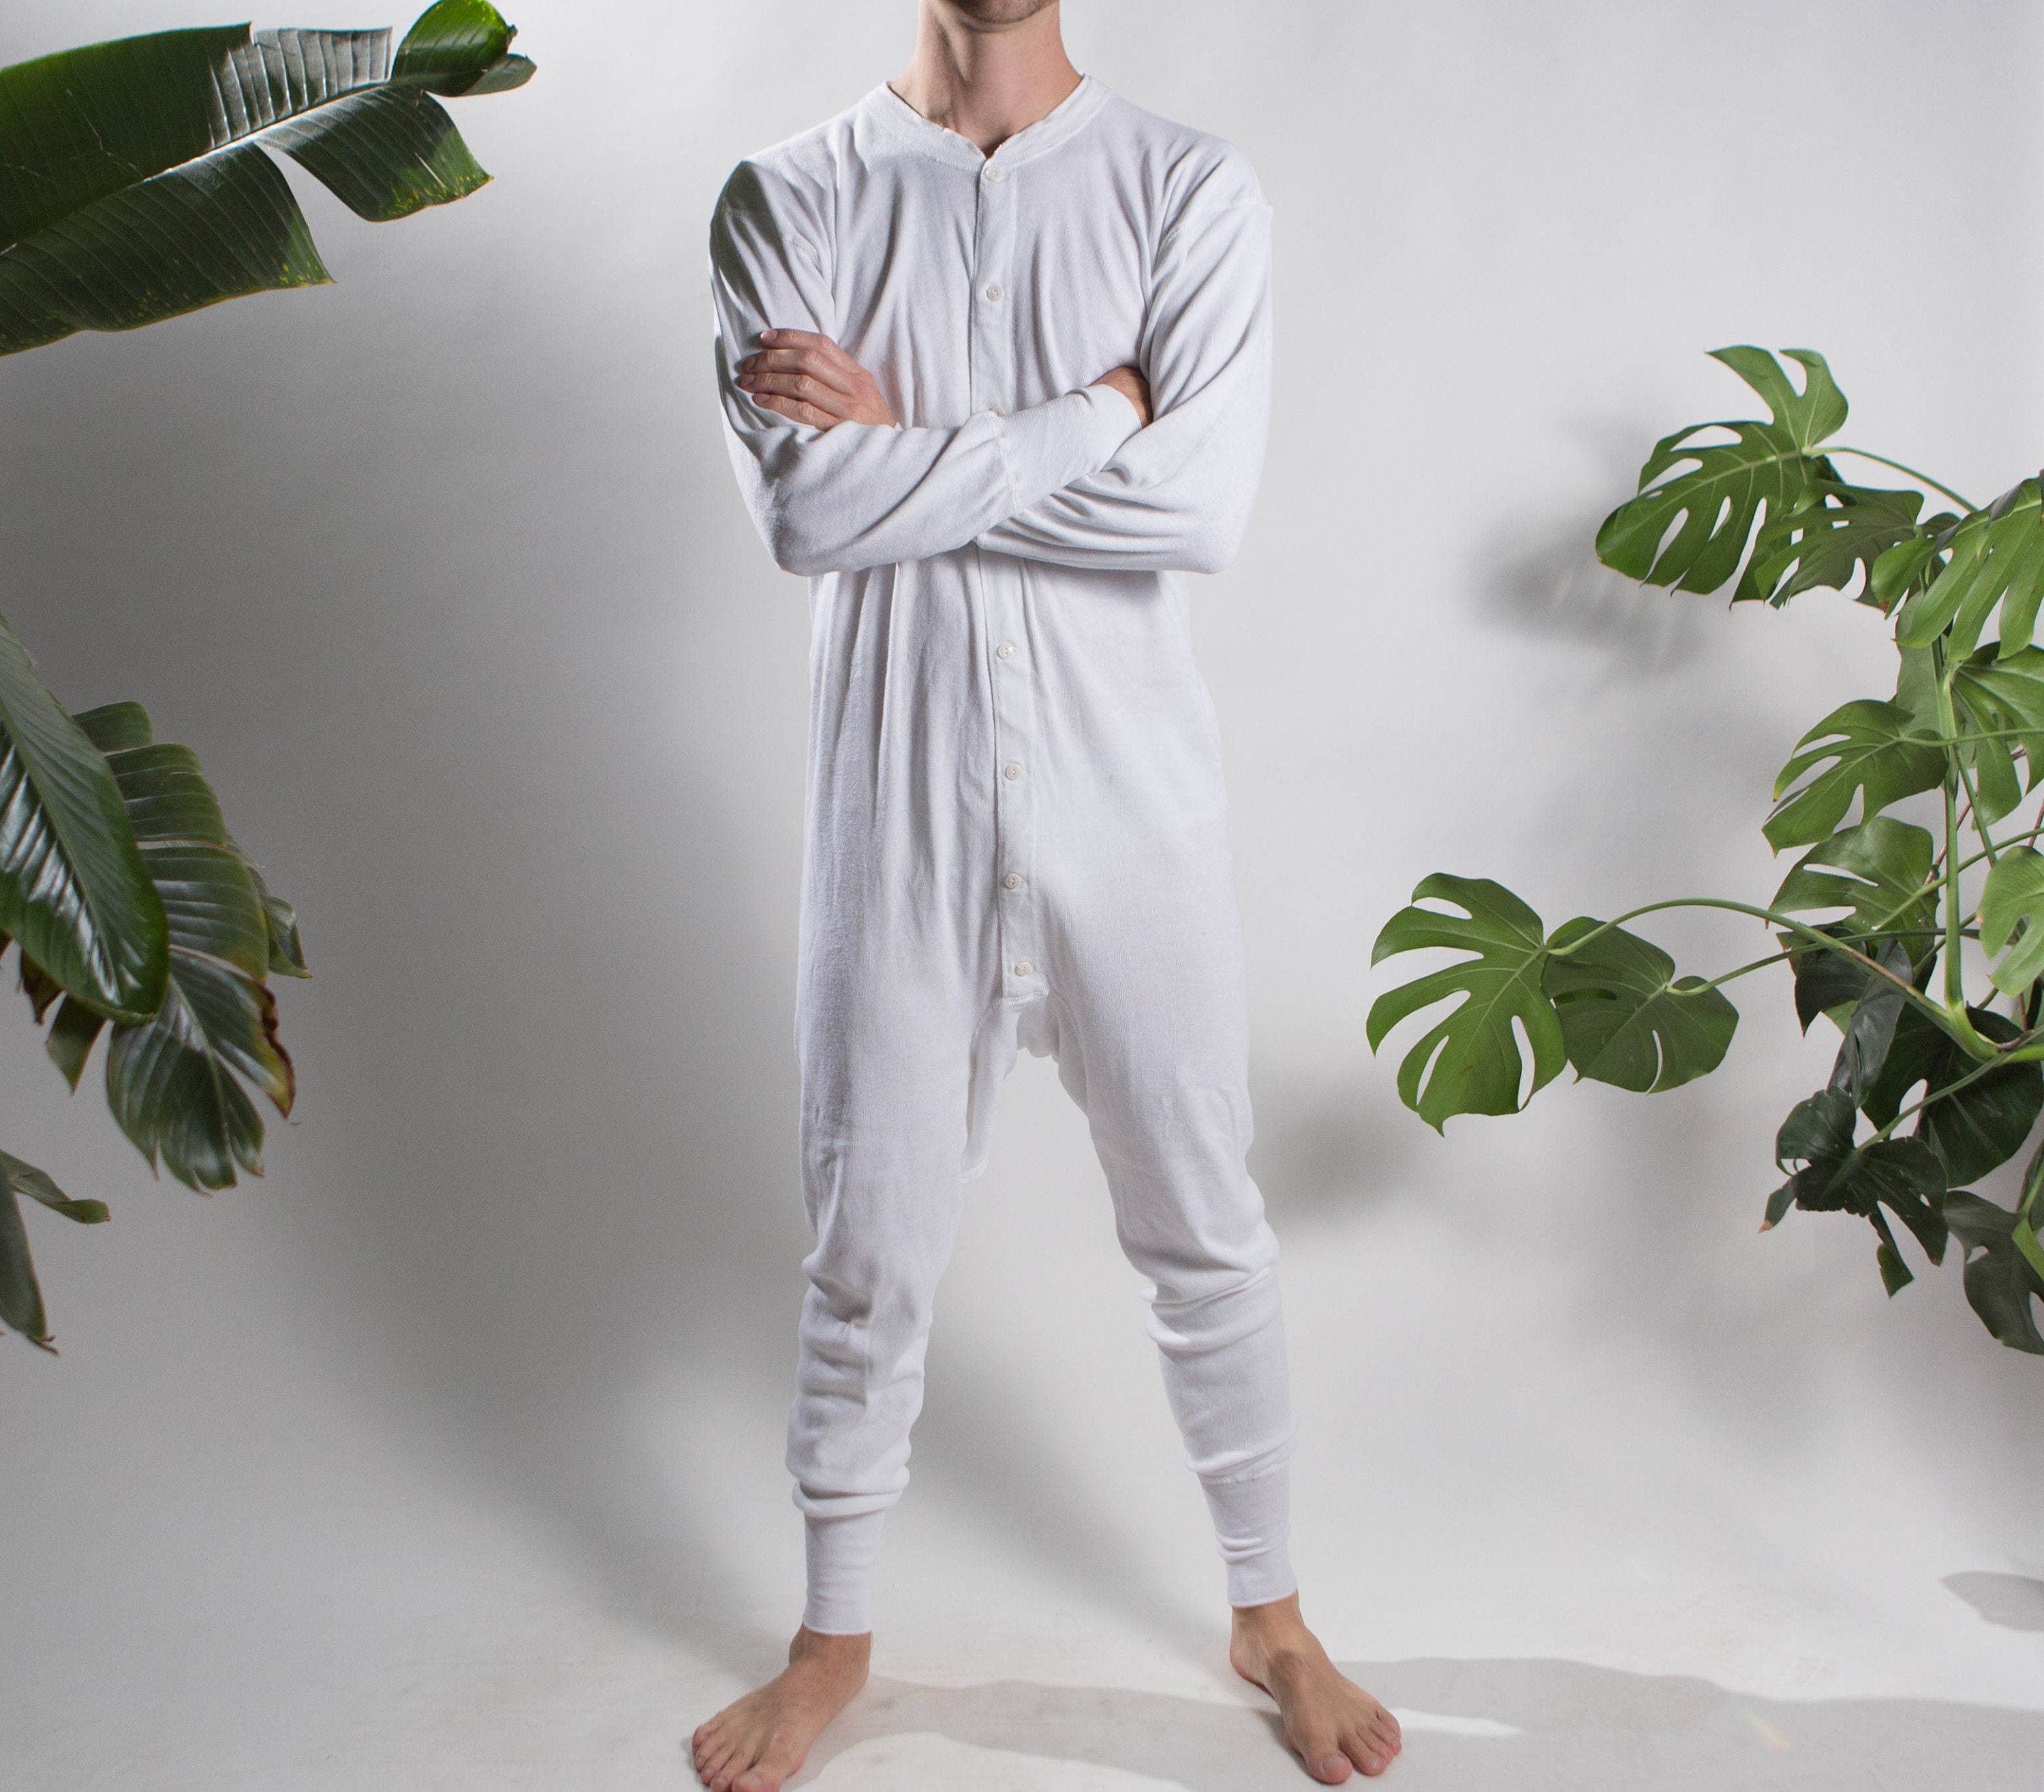 Avamo Men Union Suit Solid Color One Piece Pajama Underwear